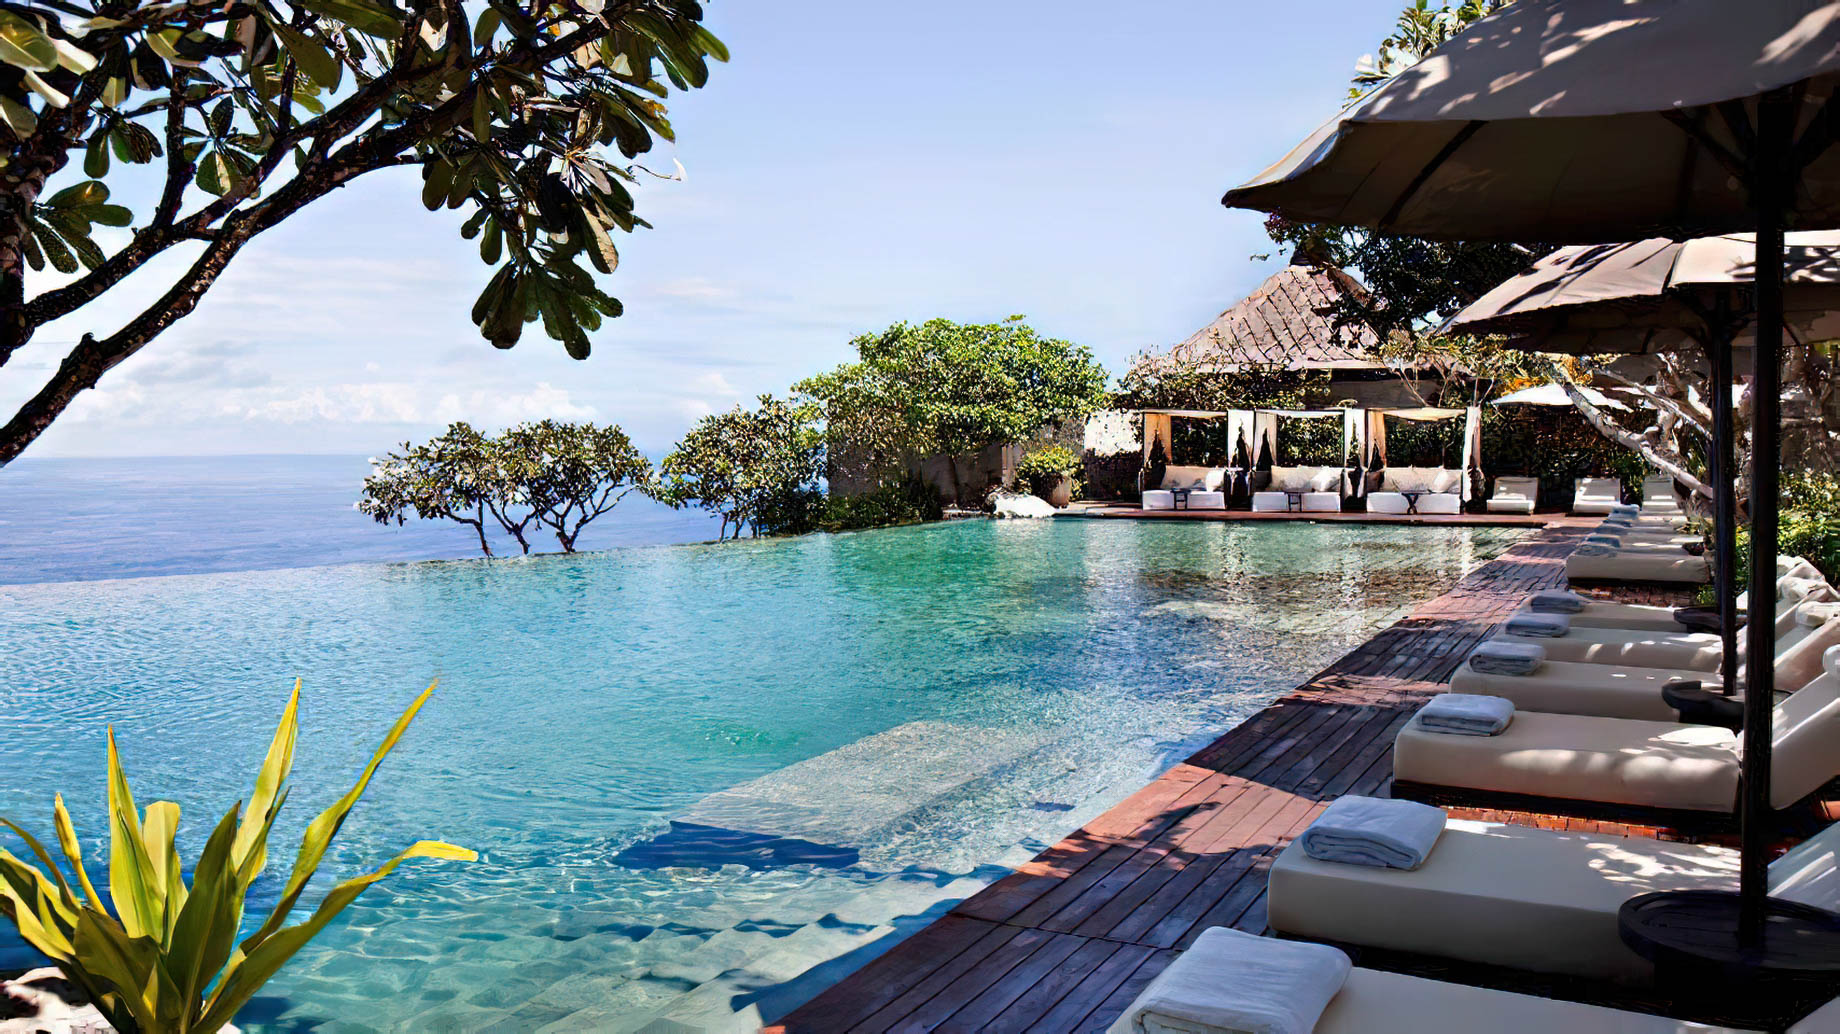 Bvlgari Resort Bali – Uluwatu, Bali, Indonesia – Infinity Pool Deck